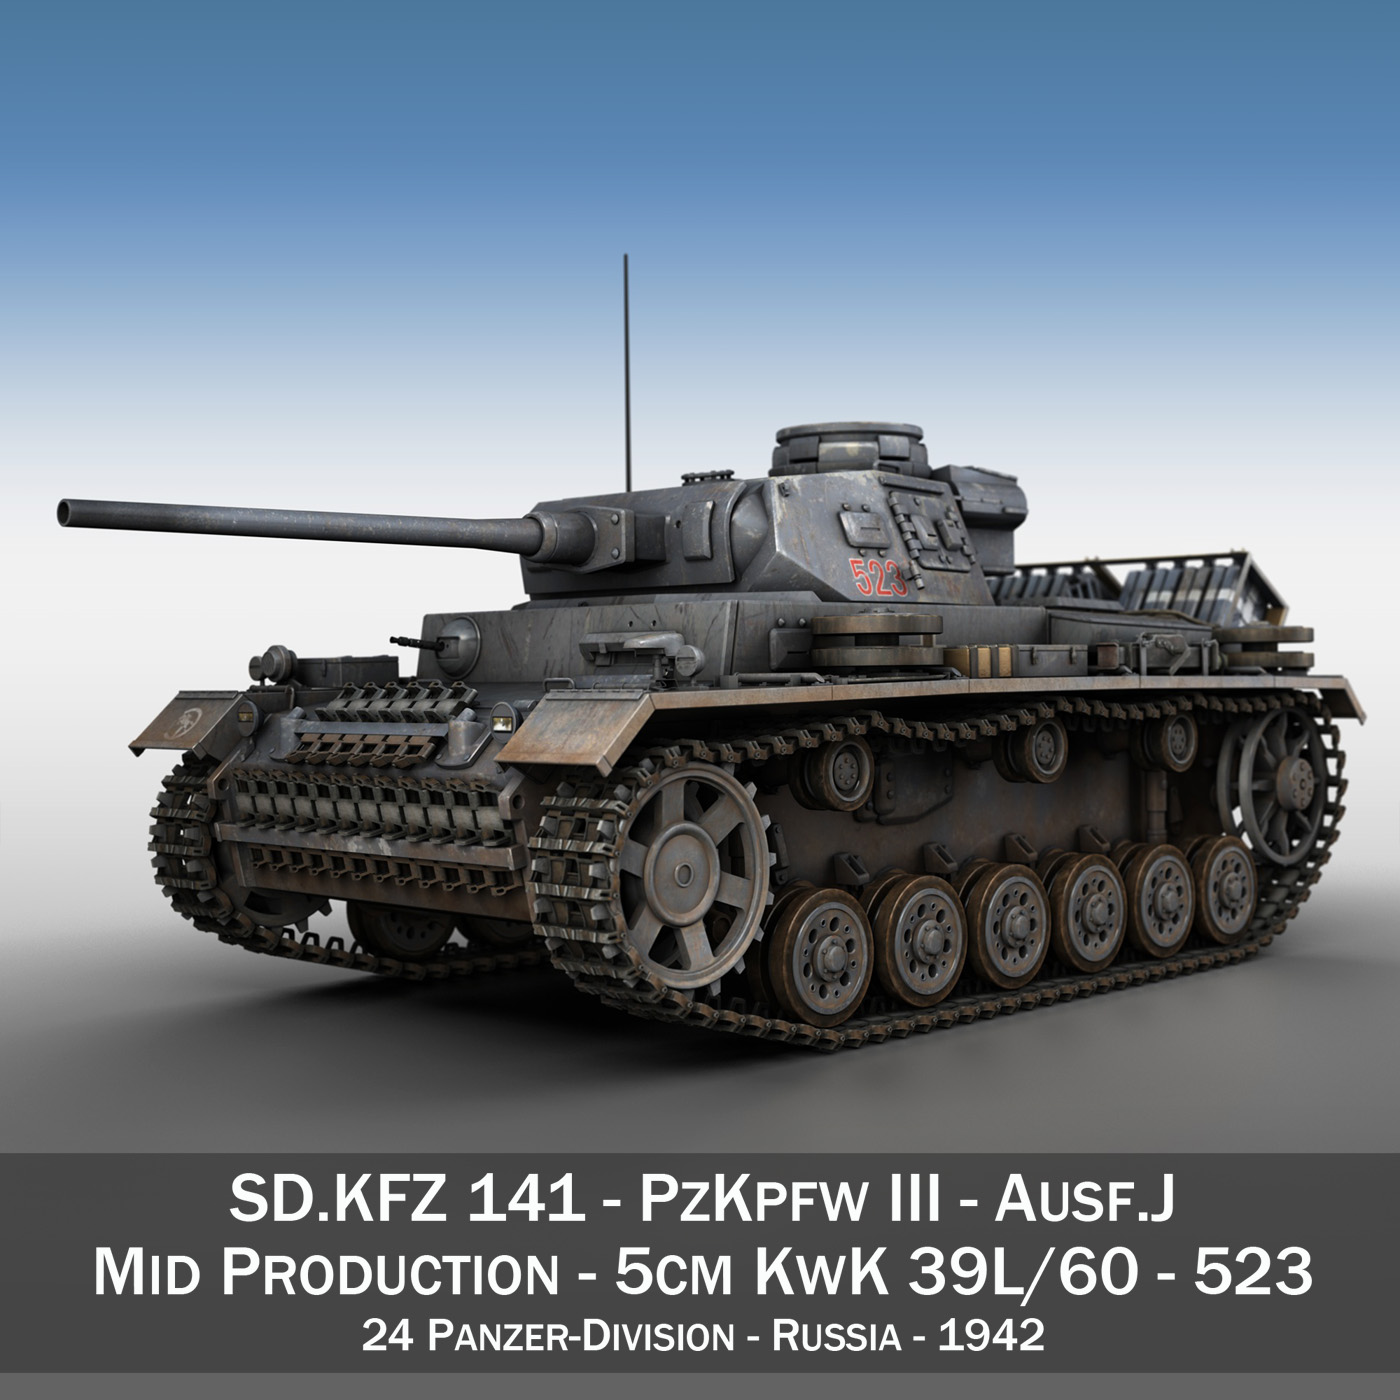 pzkpfw iii – panzer 3 – ausf.j – 523 3d model 3ds fbx c4d lwo obj 189074